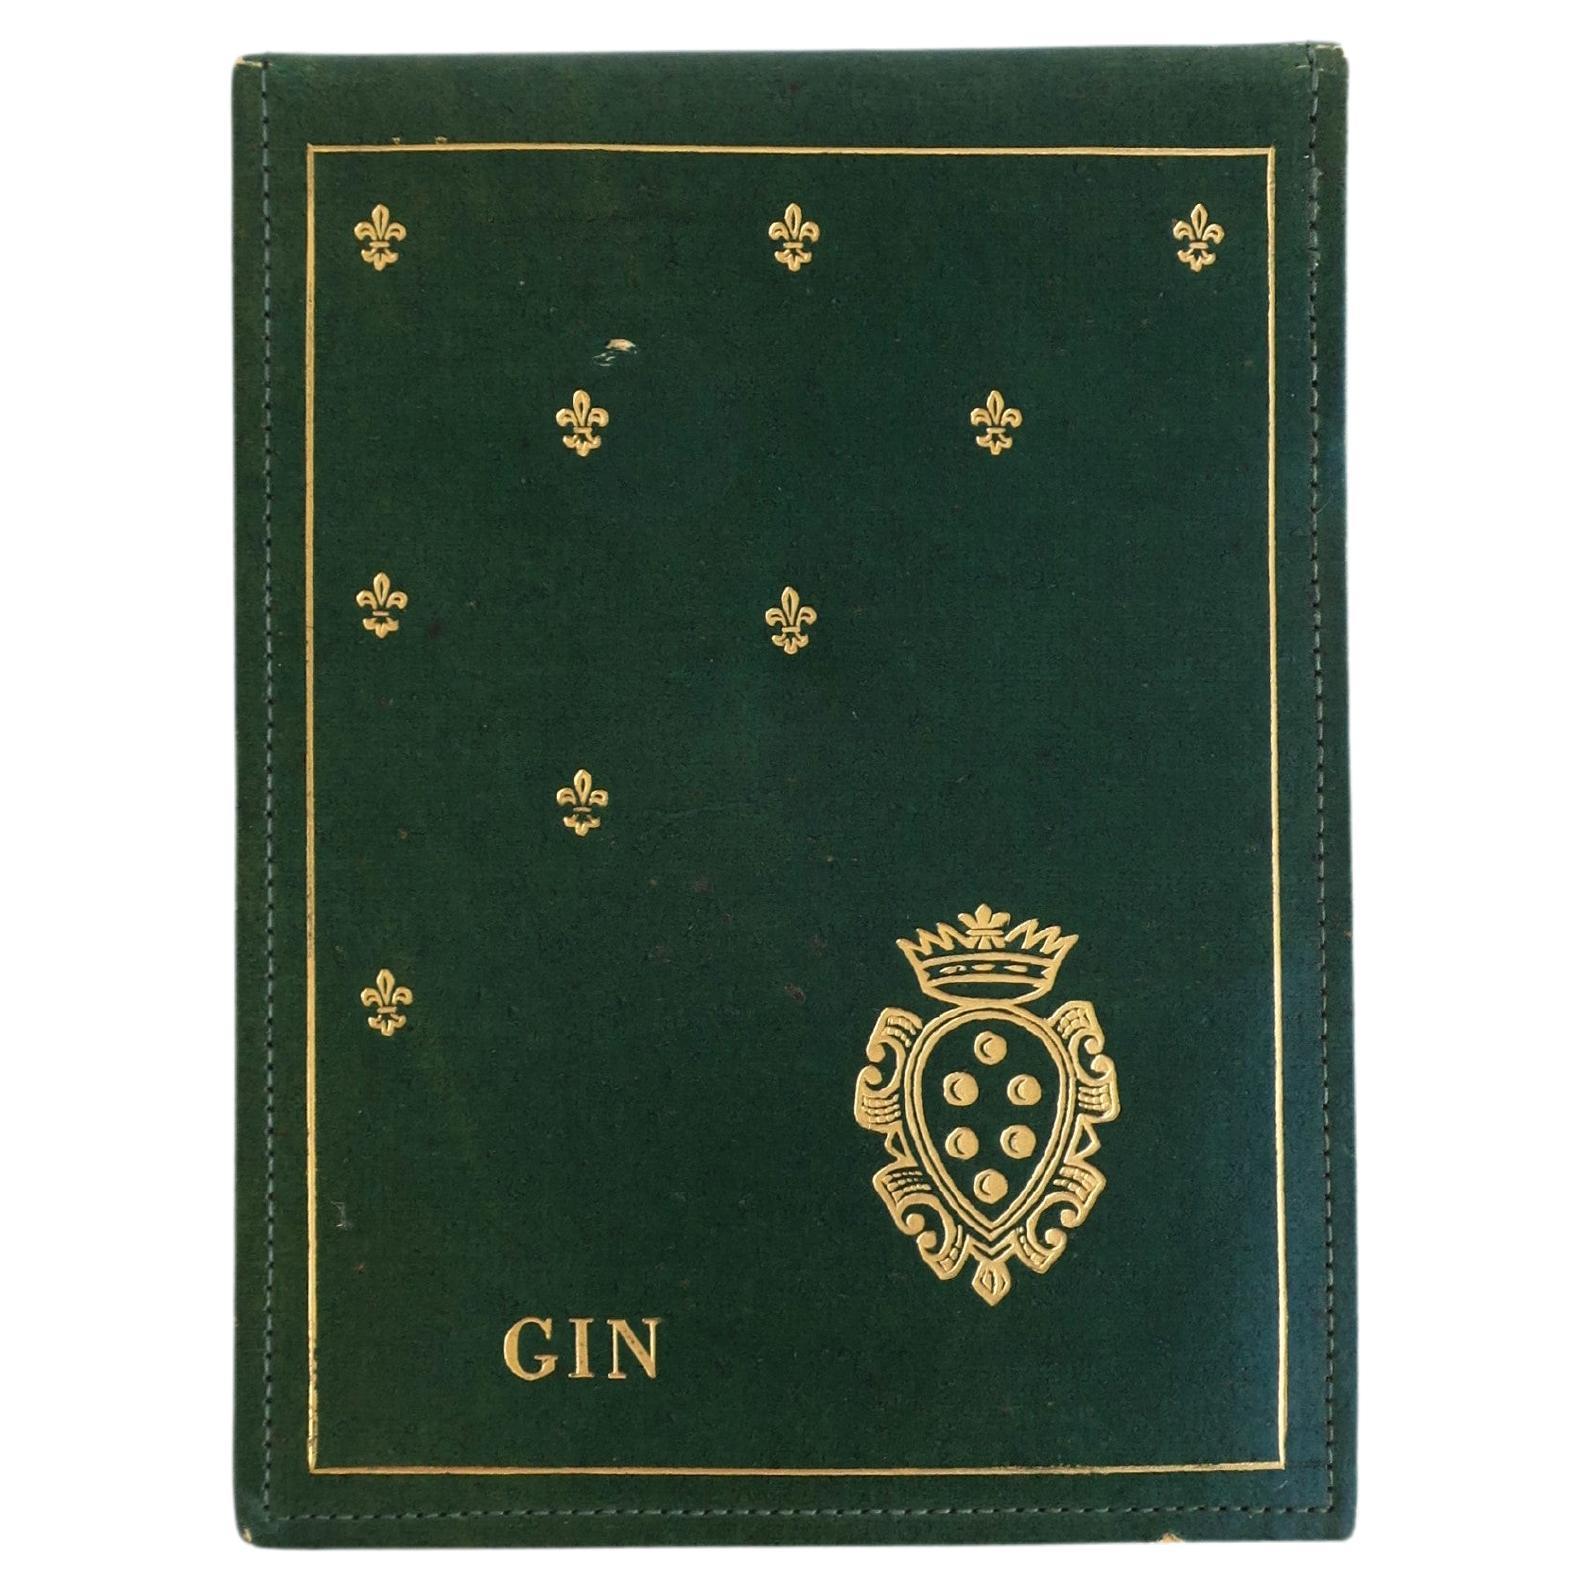 Gin Card Game Scoring Pad Made in Italy